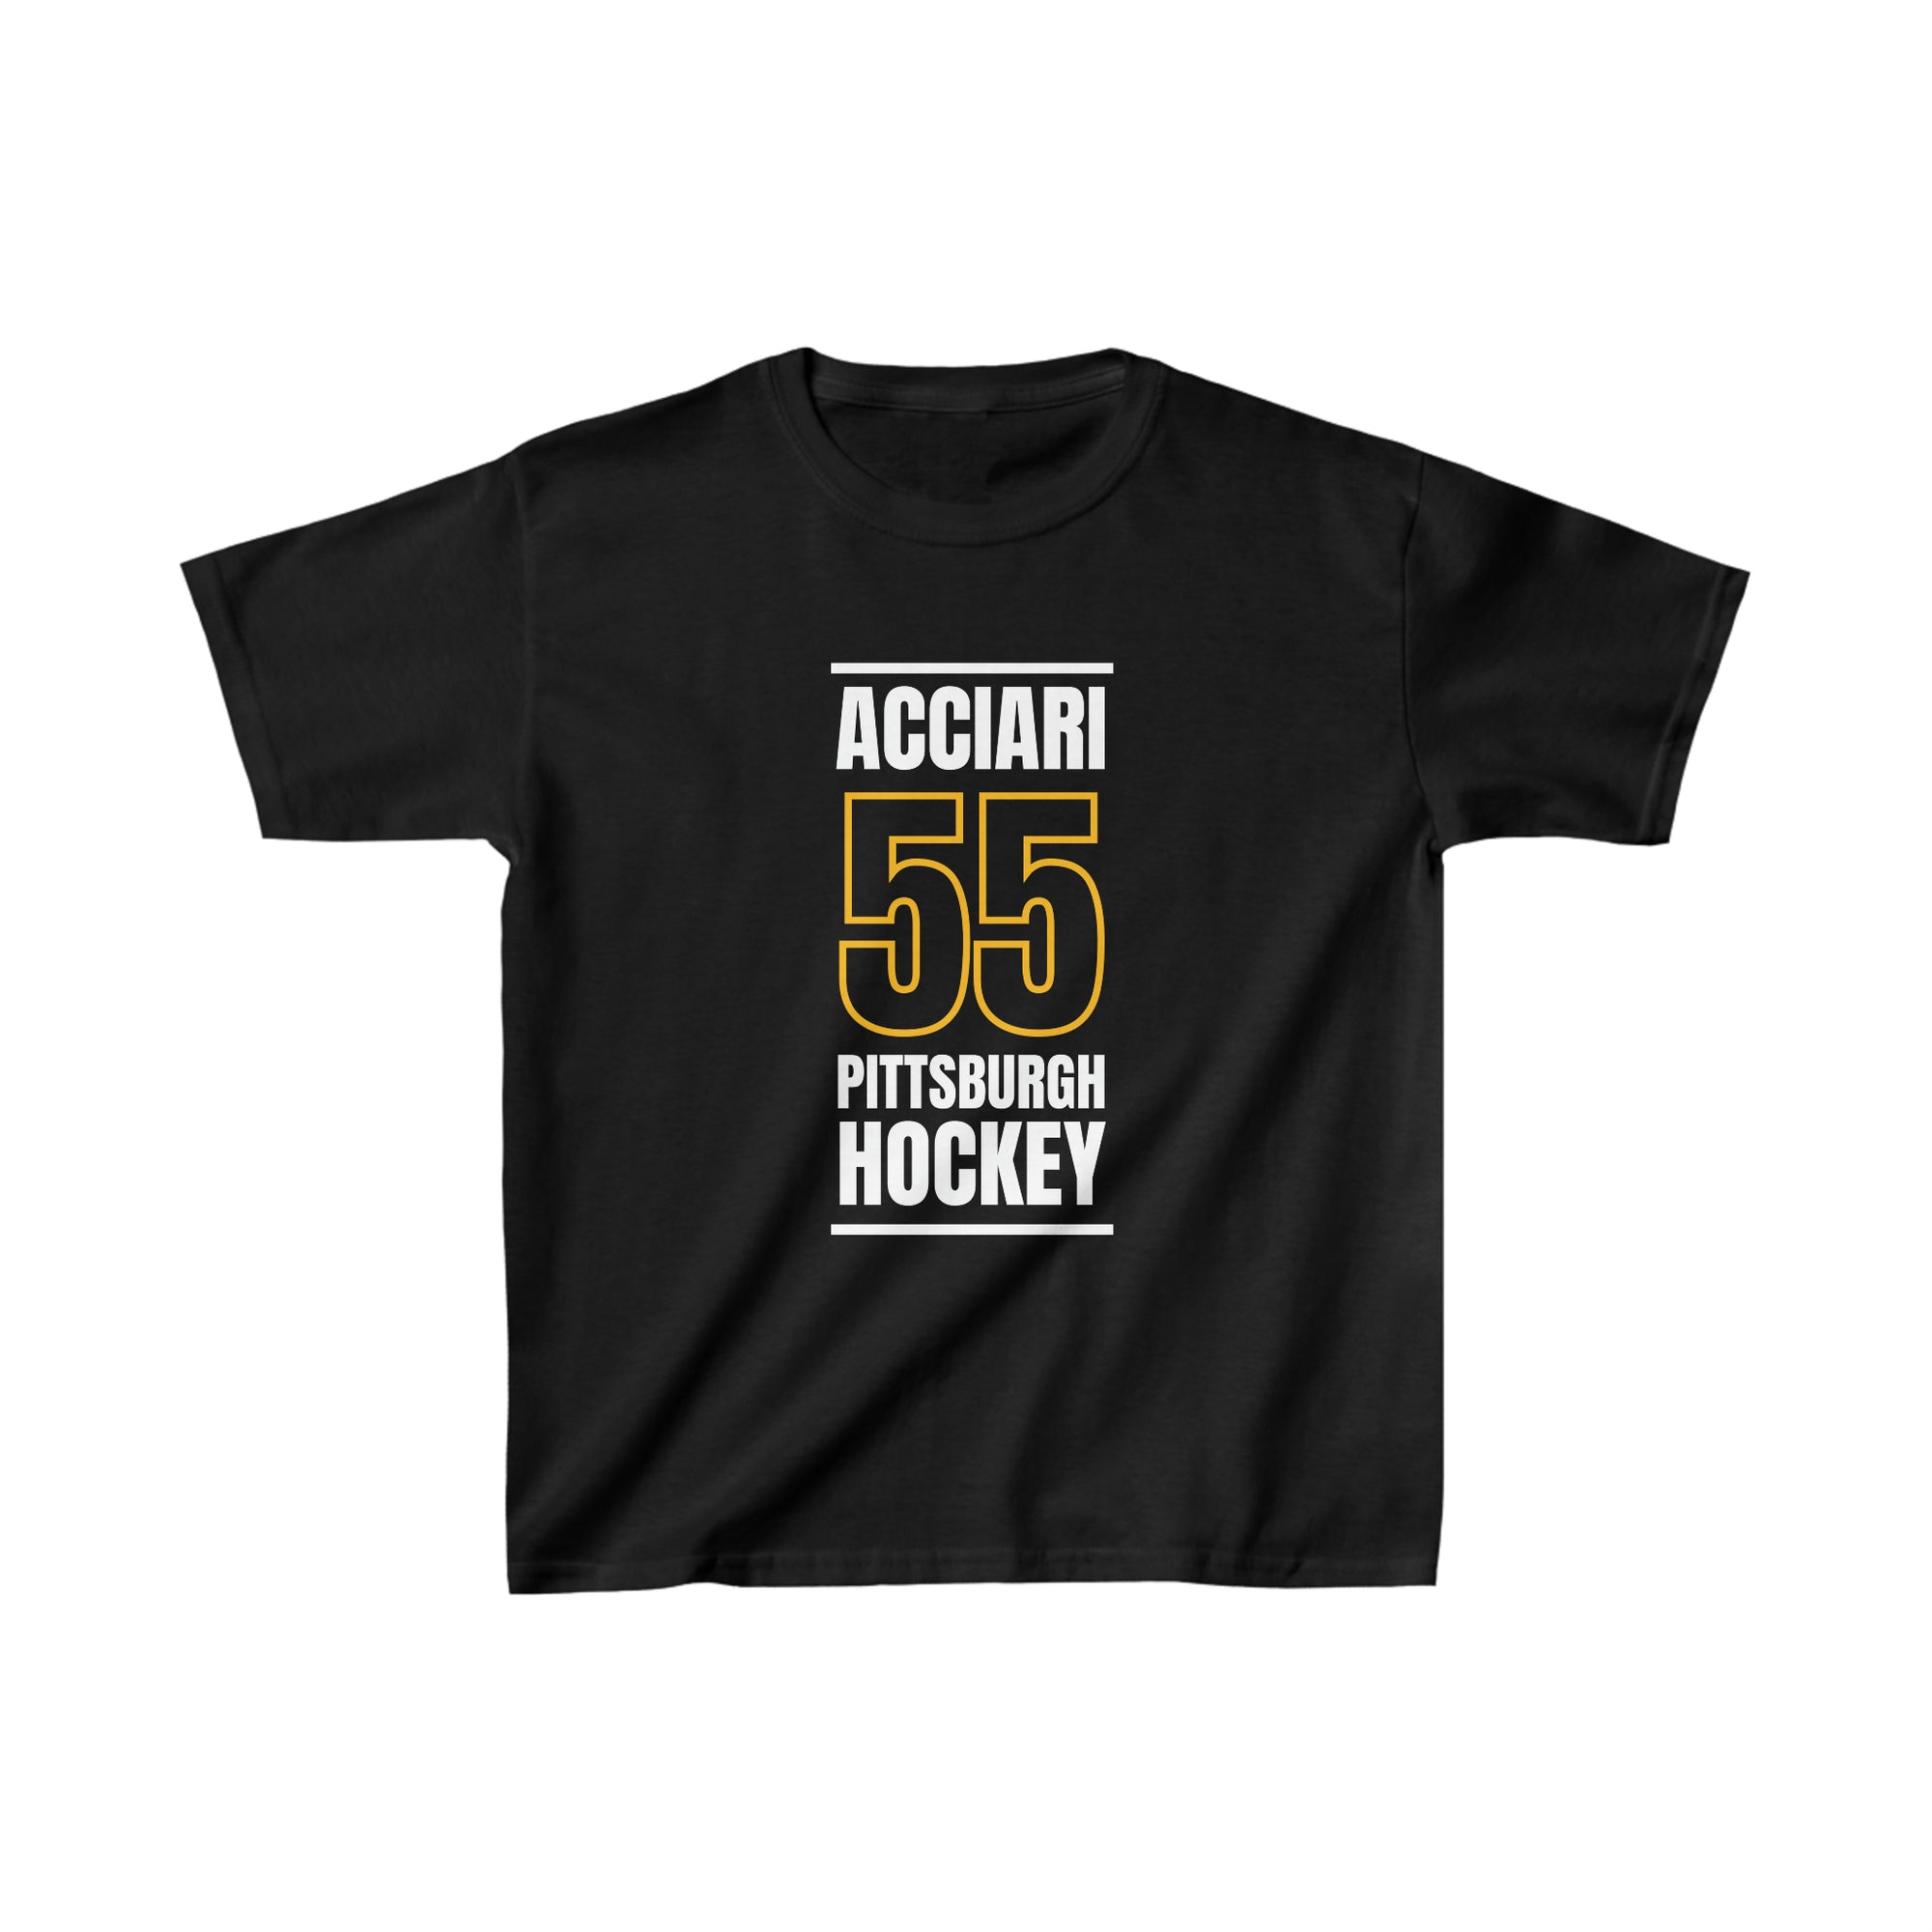 Acciari 55 Pittsburgh Hockey Black Vertical Design Kids Tee